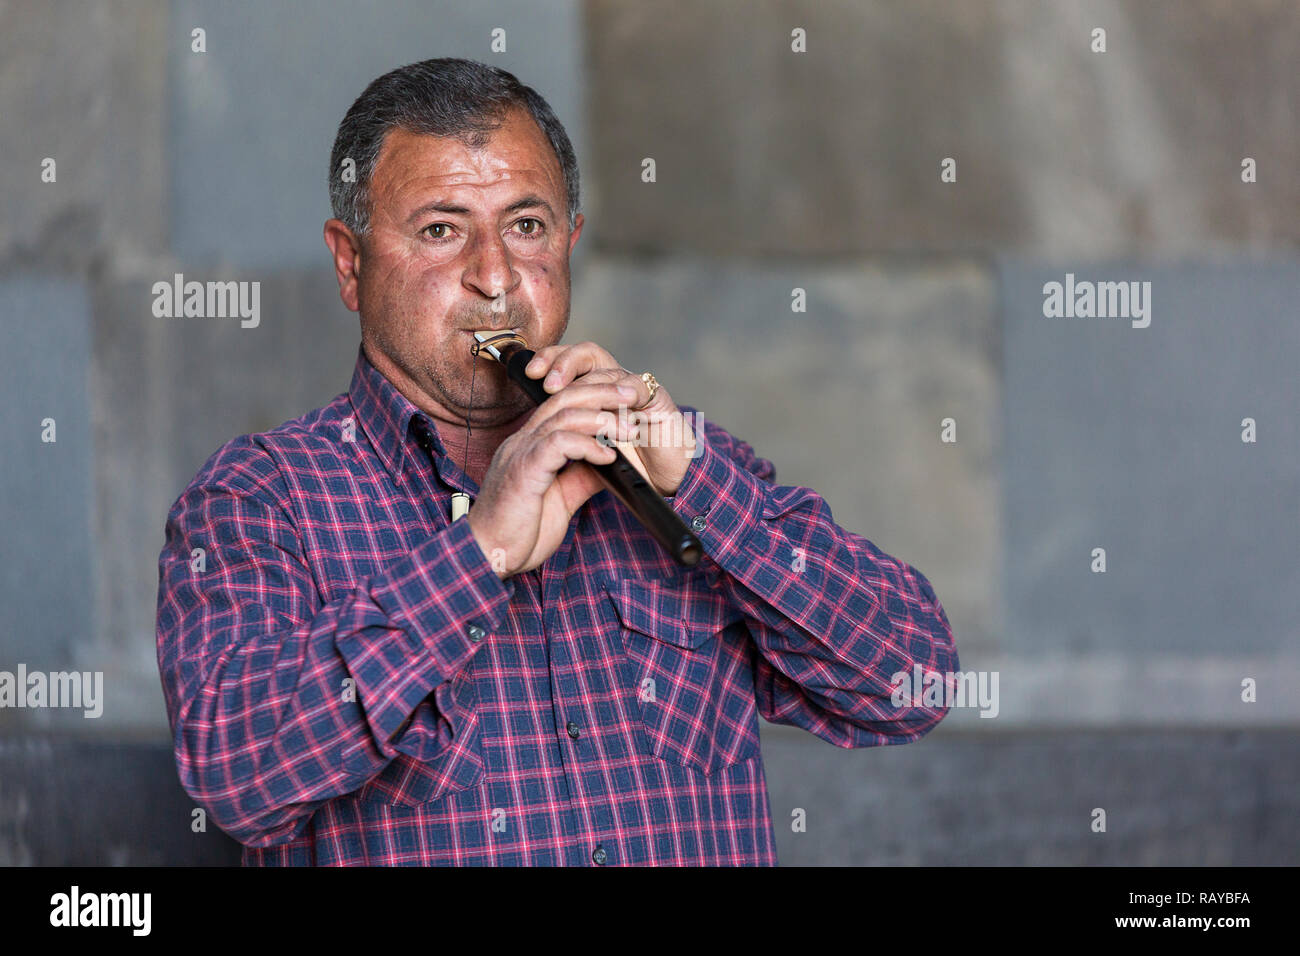 Hombre armenio tocando el instrumento musical armenio tradicional conocido como Duduk, Armenia. Foto de stock